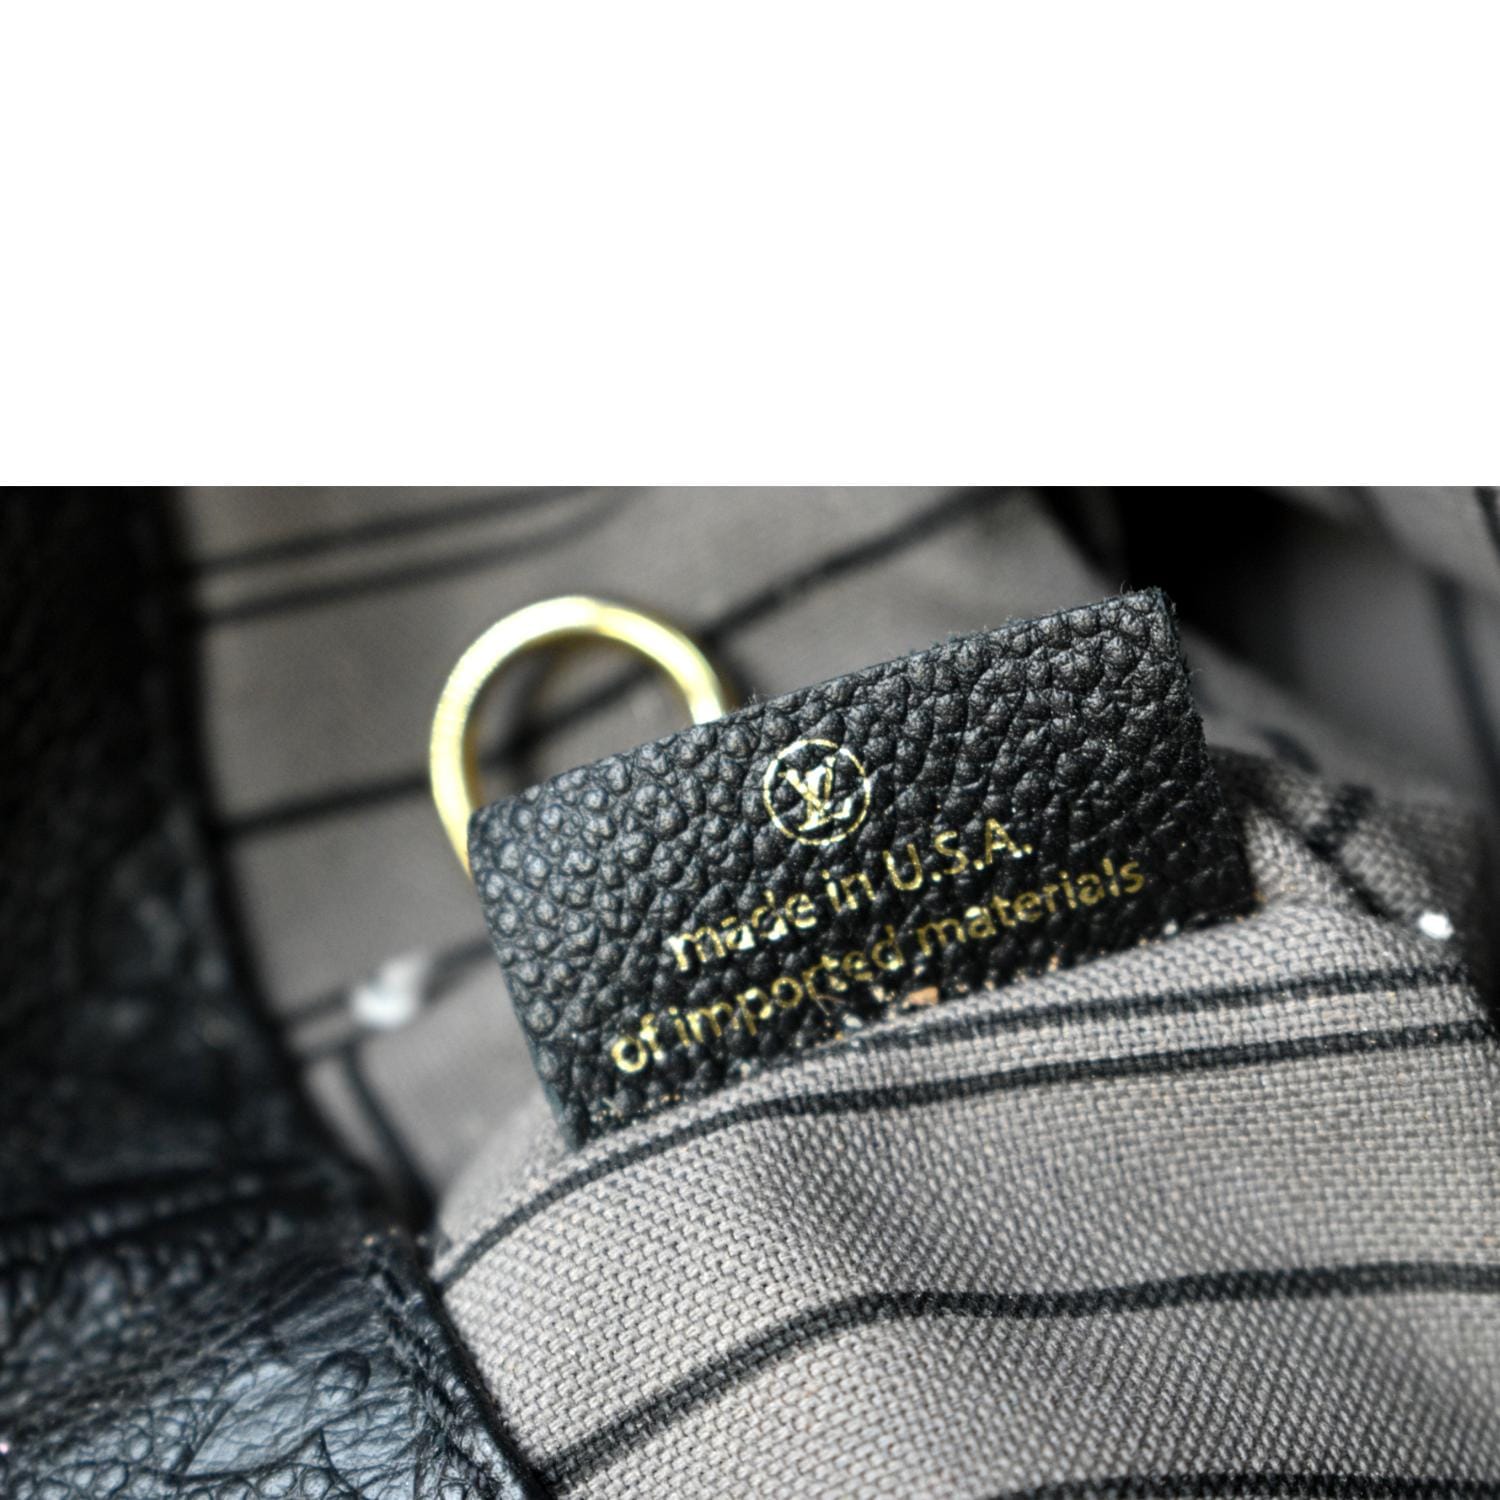 USED Louis Vuitton Empreinte Artsy MM Black Leather Hobo - MyDesignerly